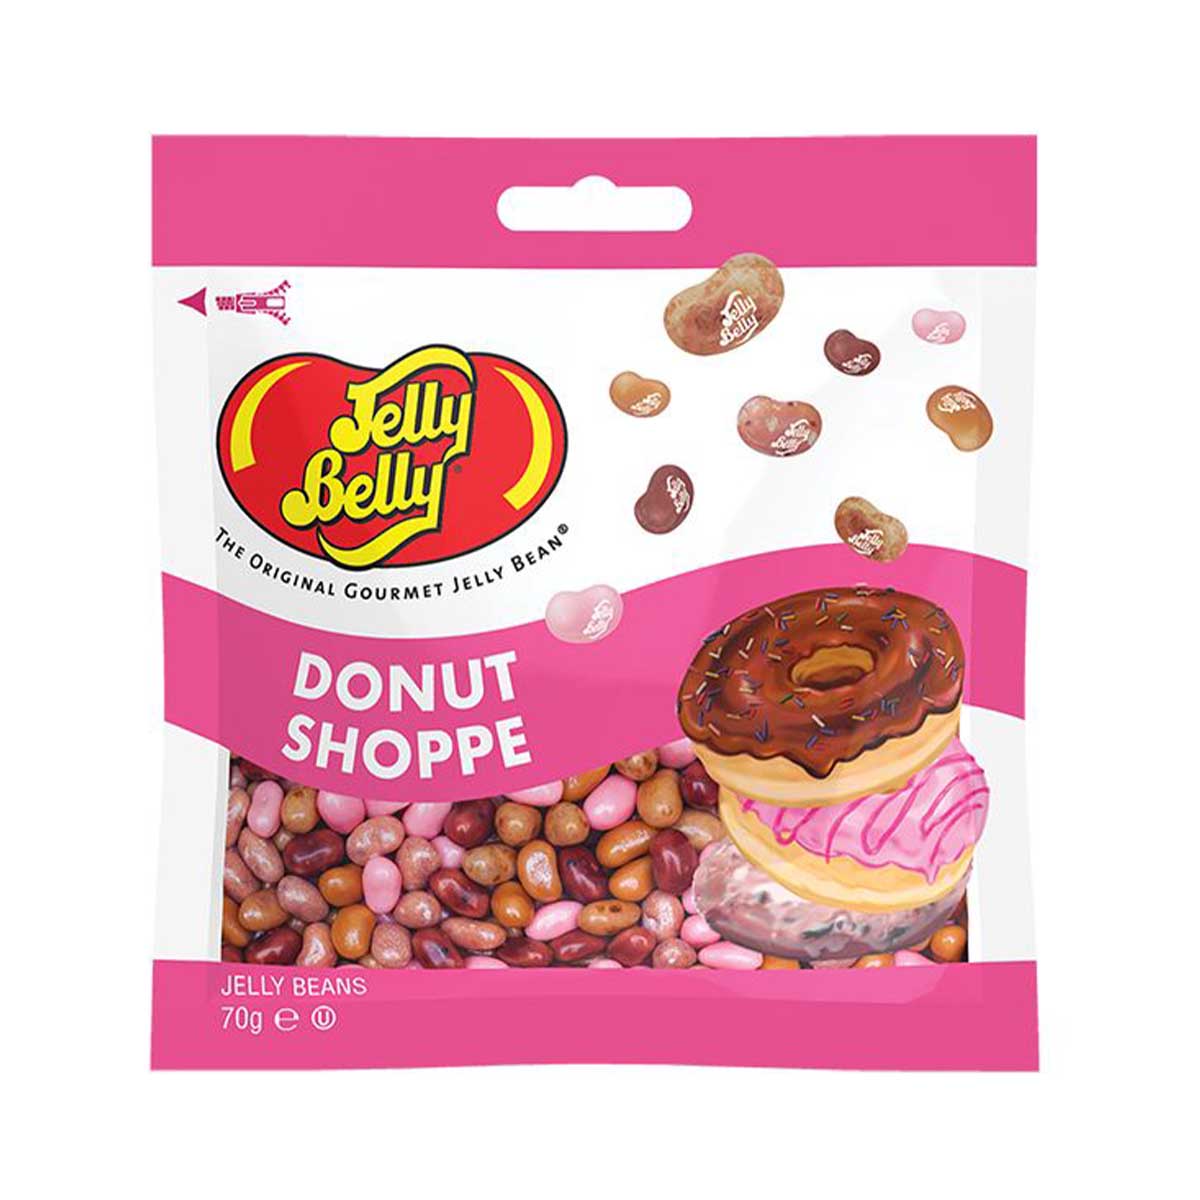 Godis Jelly Belly Donut Shoppe 70 g